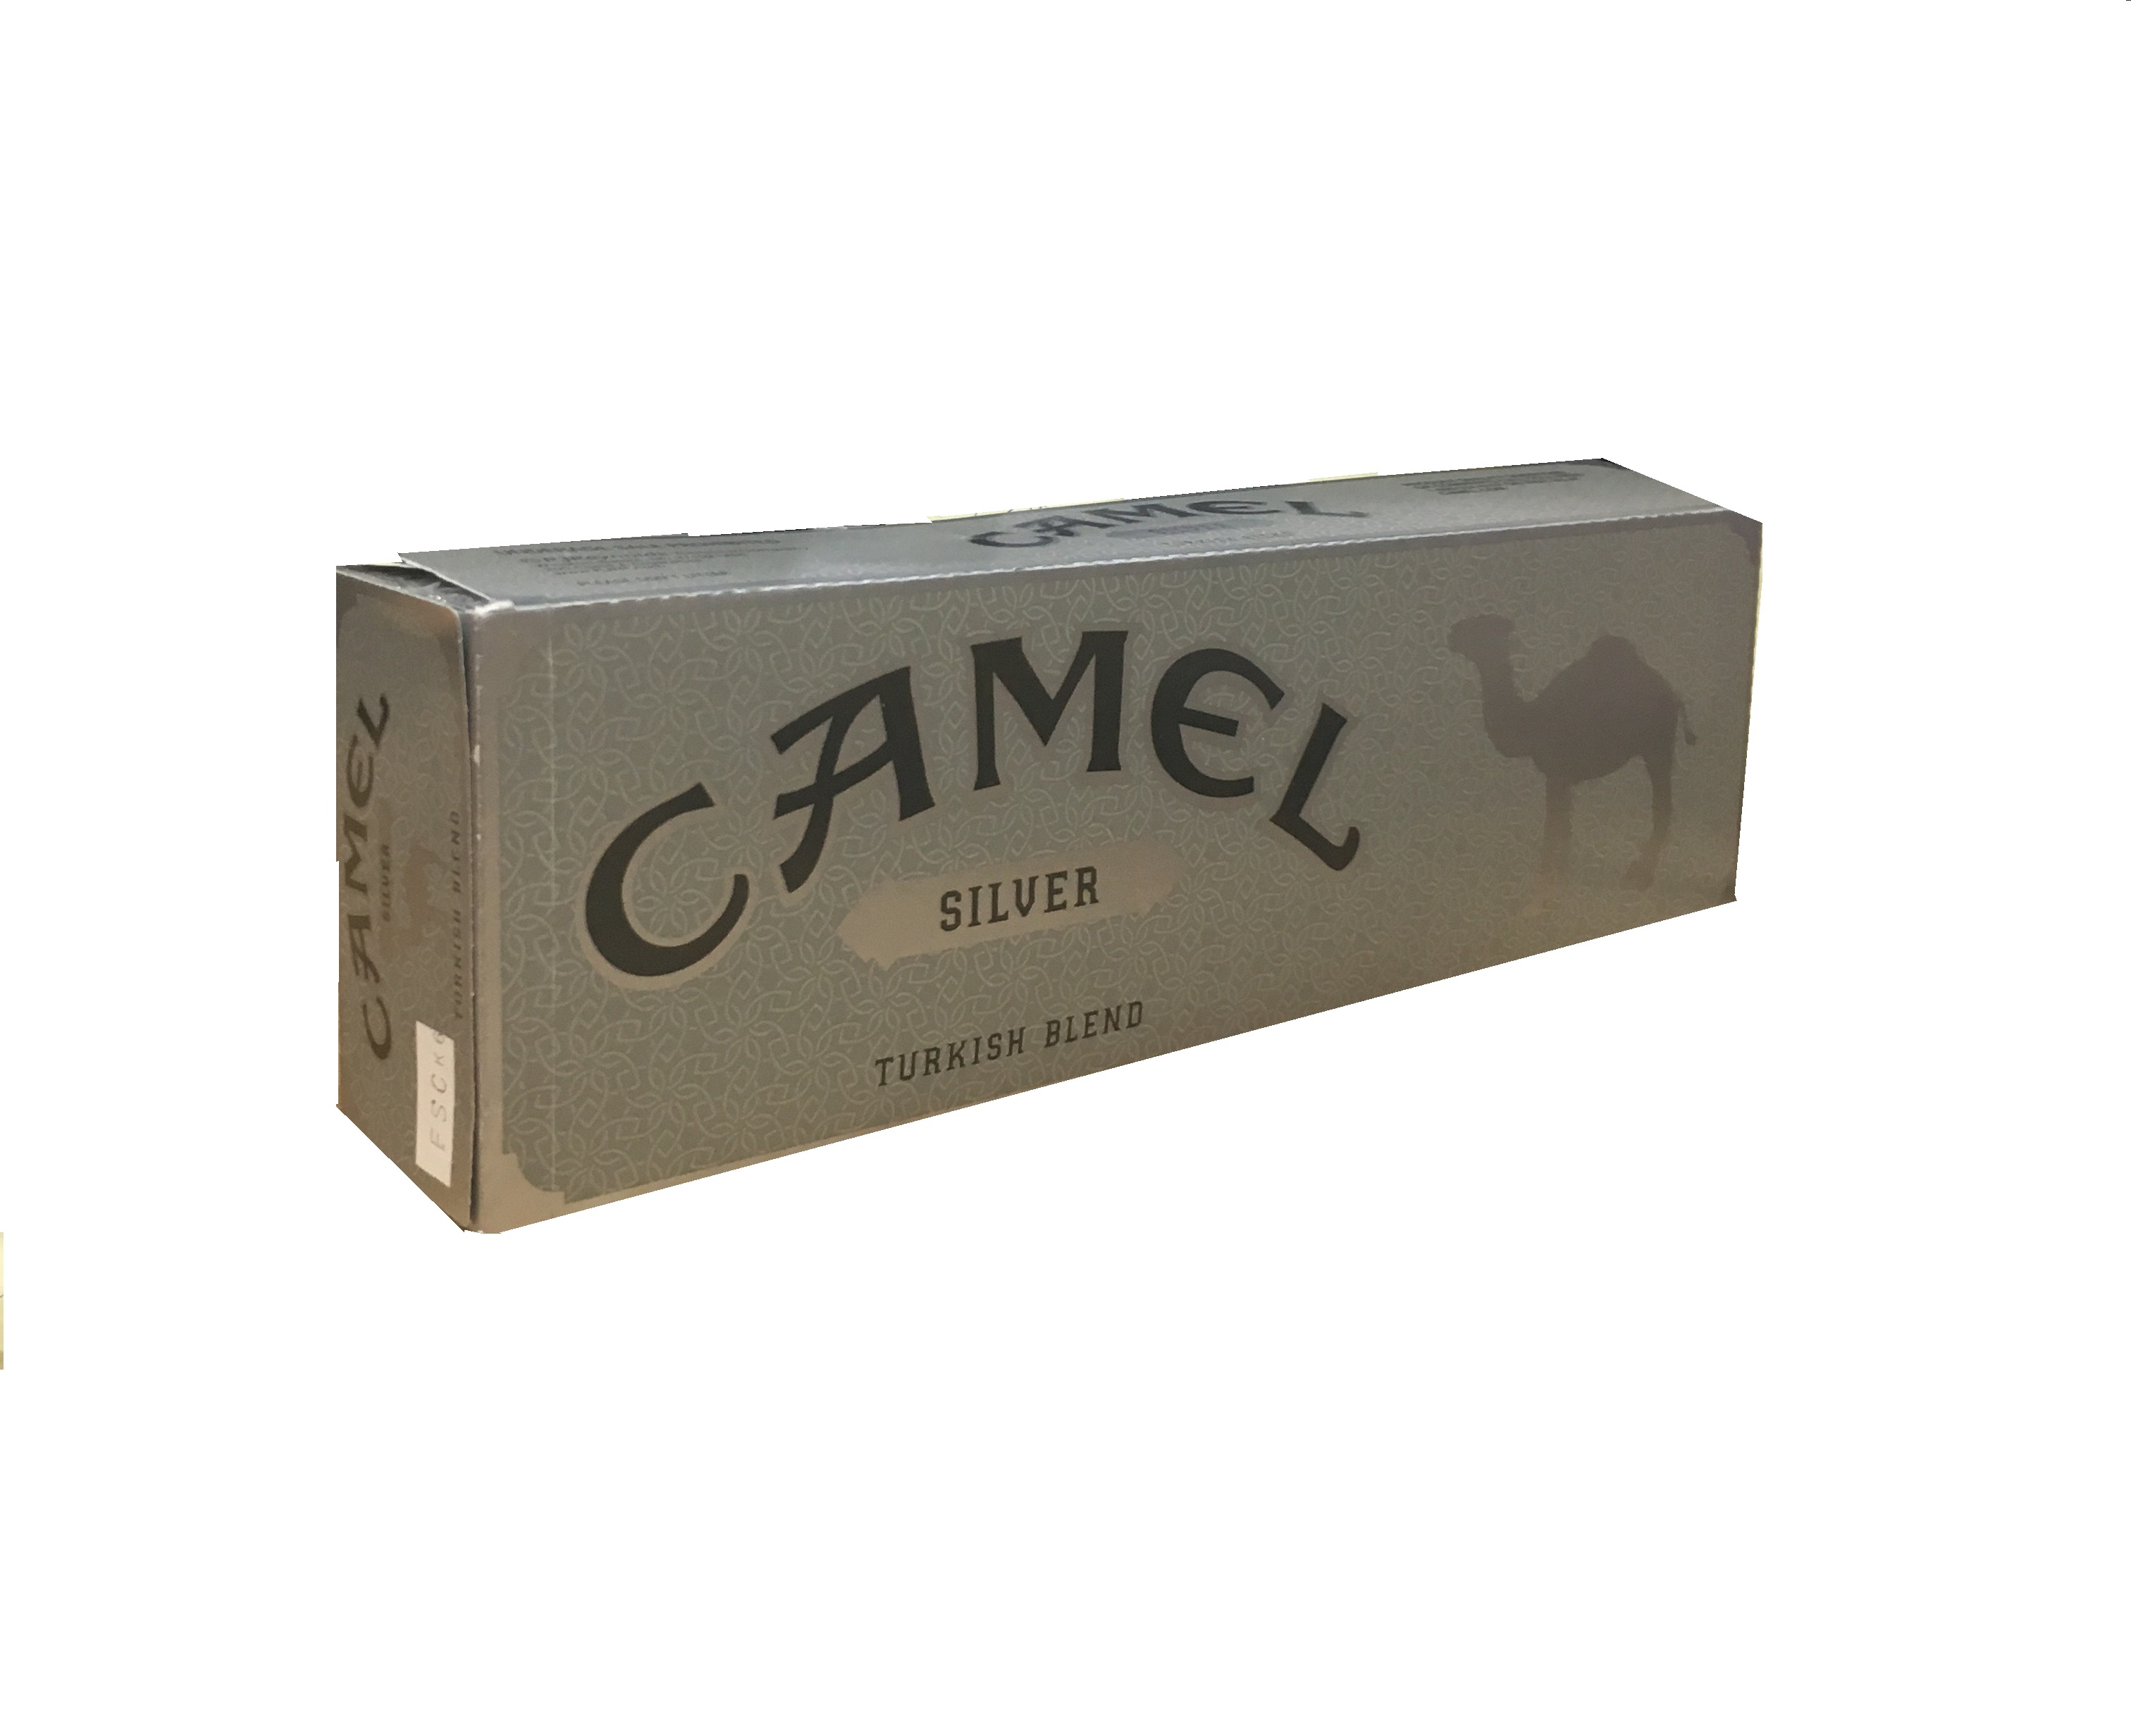 Camel silver box